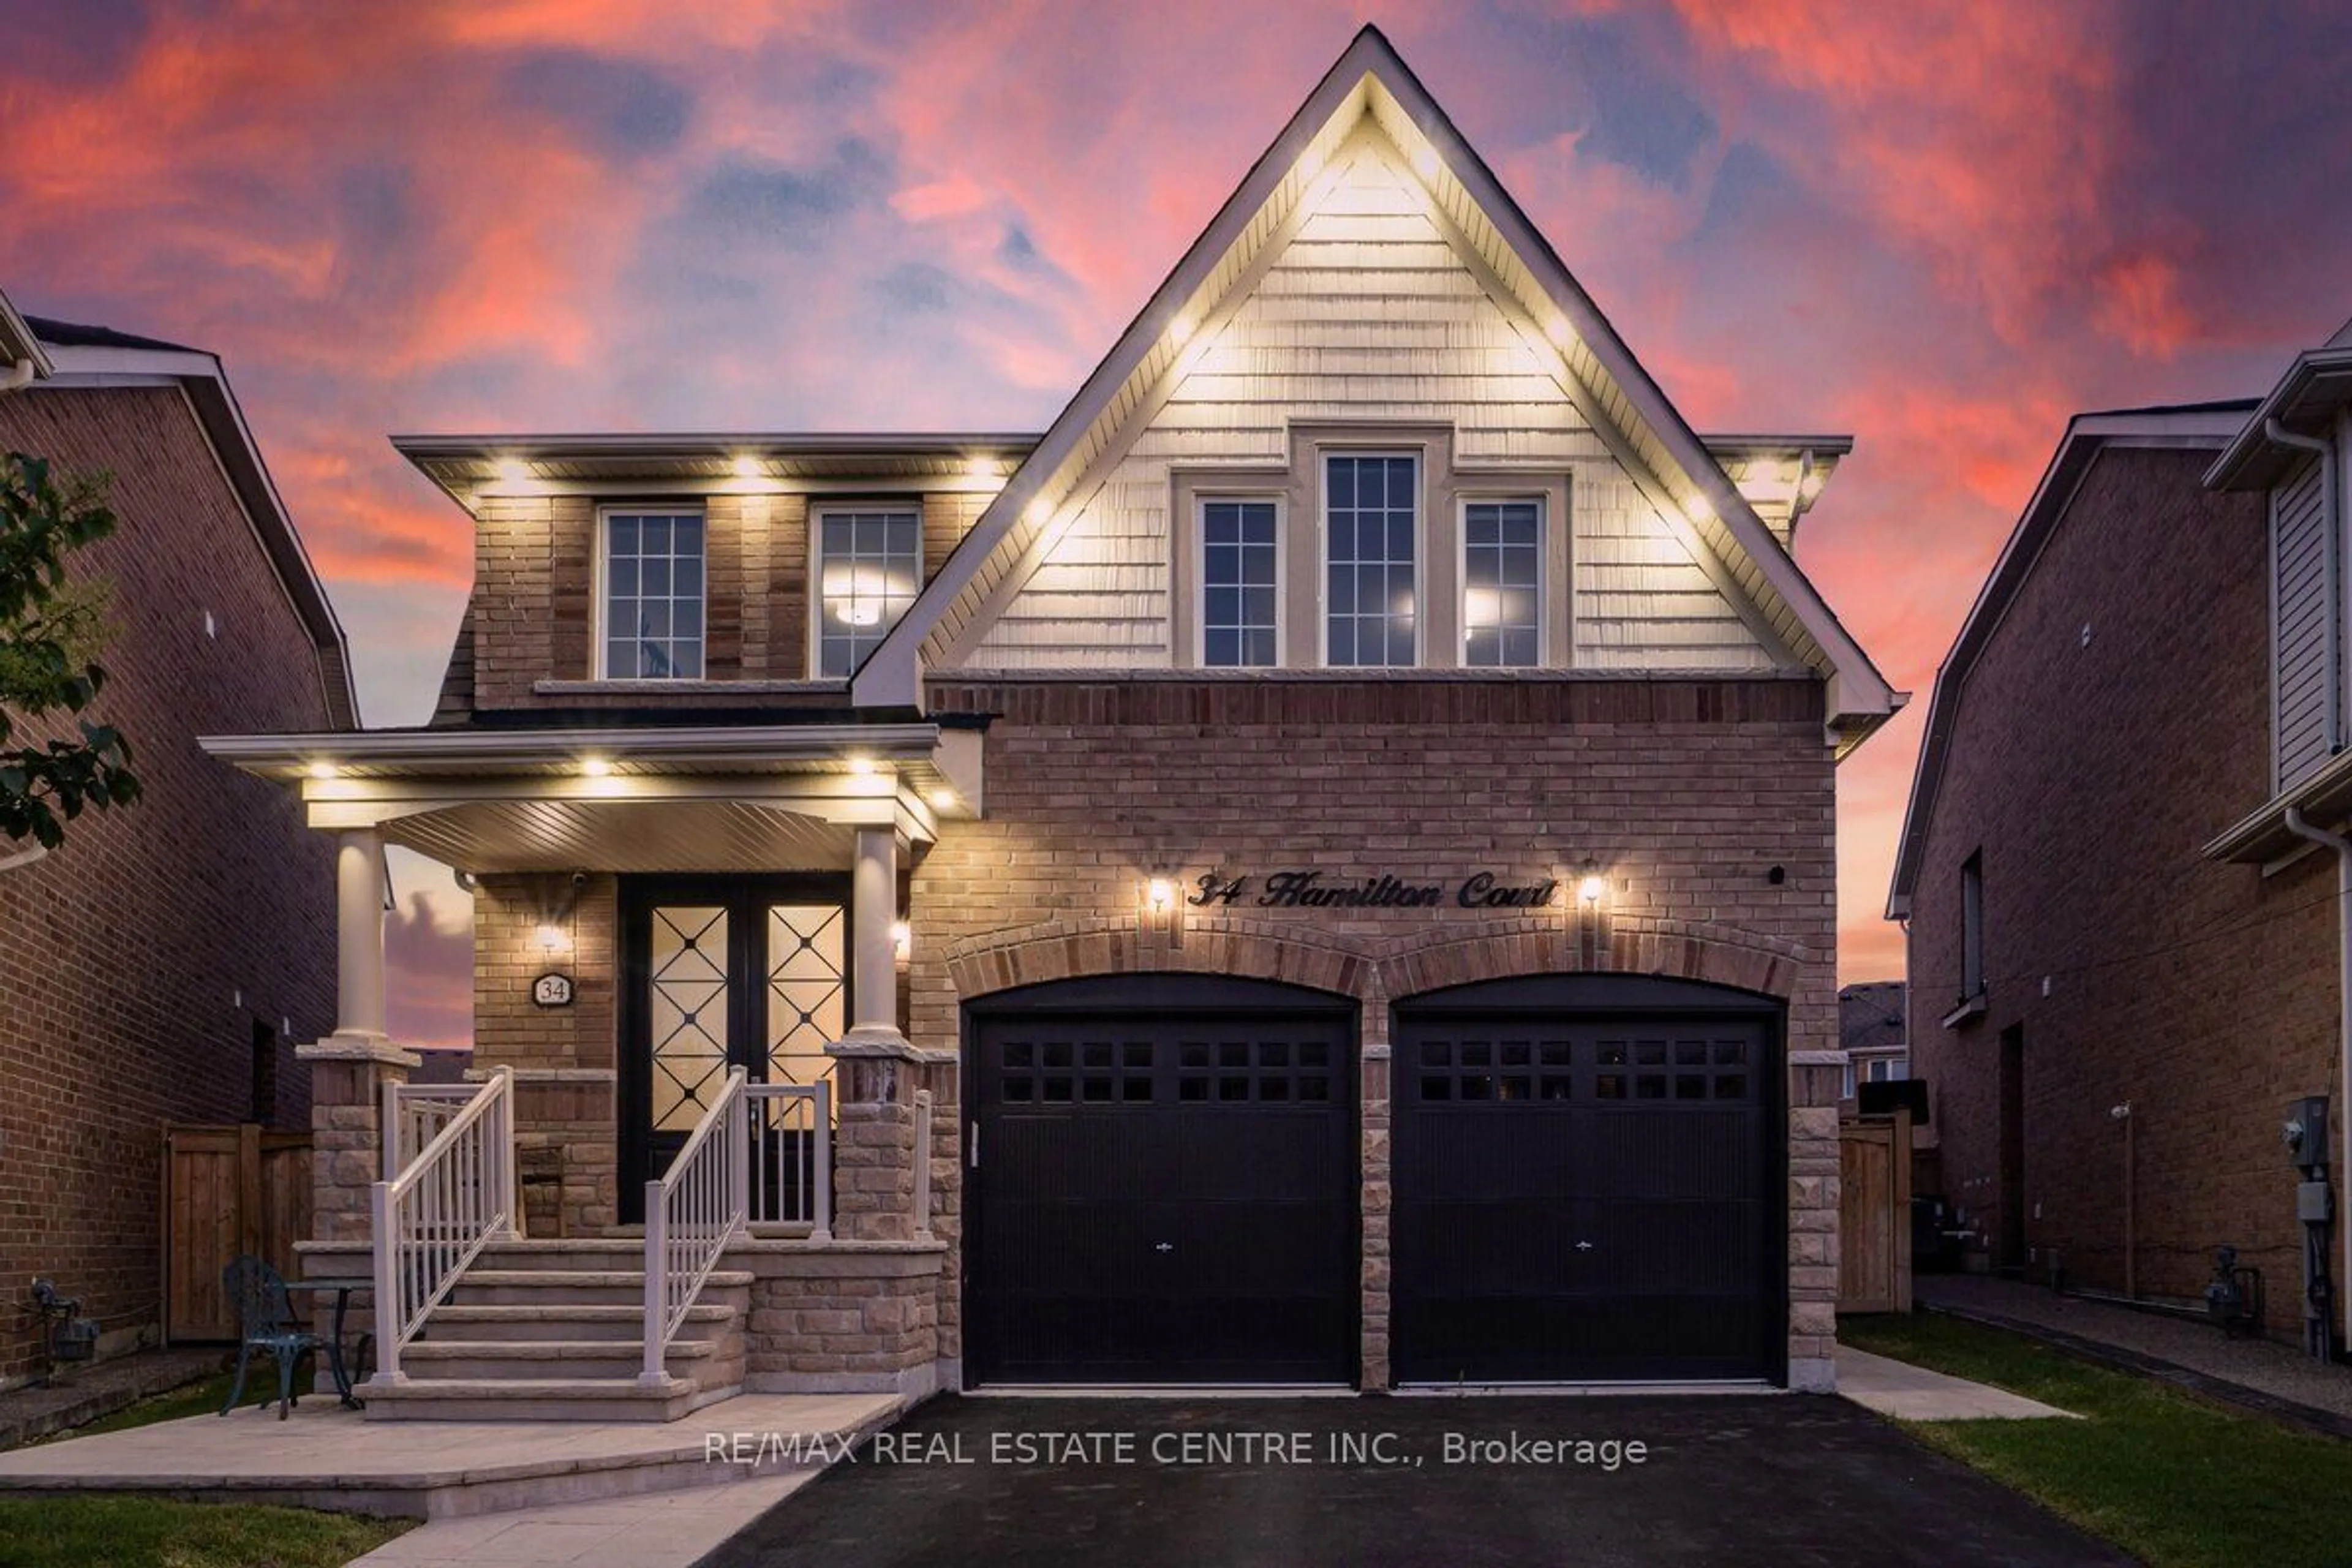 Home with brick exterior material for 34 Hamilton Crt, Caledon Ontario L7C 2H1